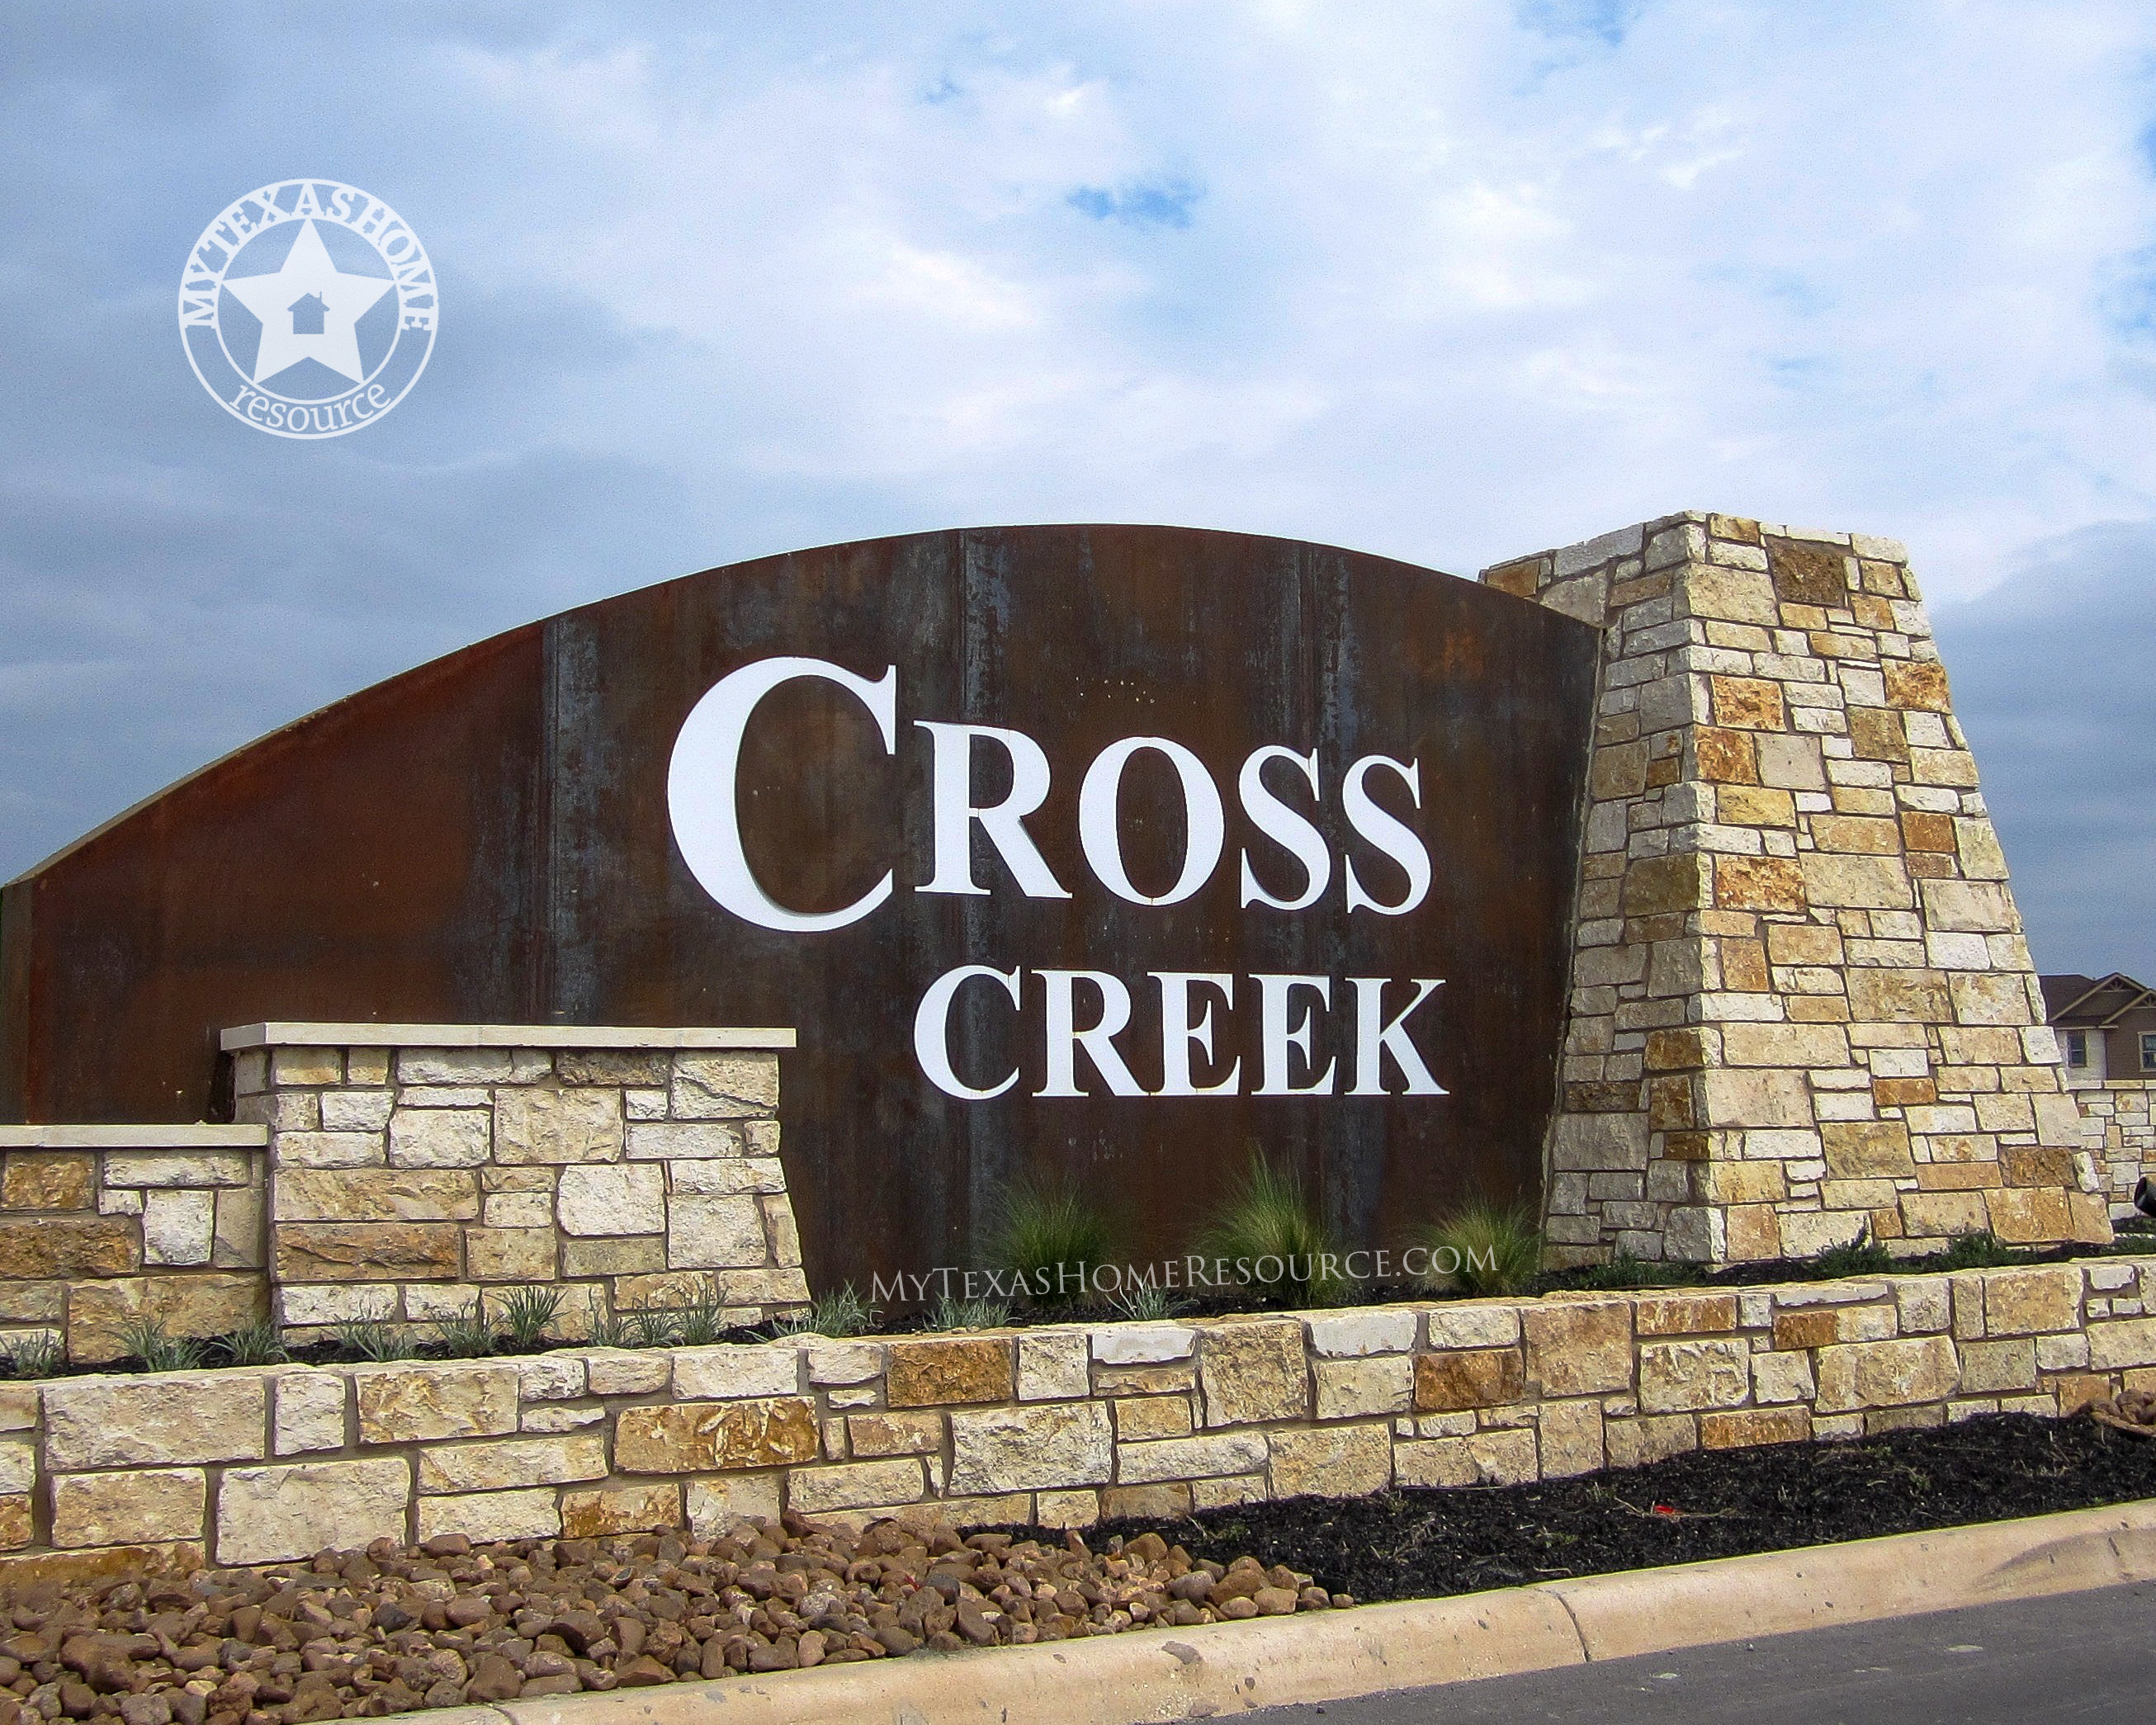 Crosscreek社区网上正规的彩票网站，德克萨斯州